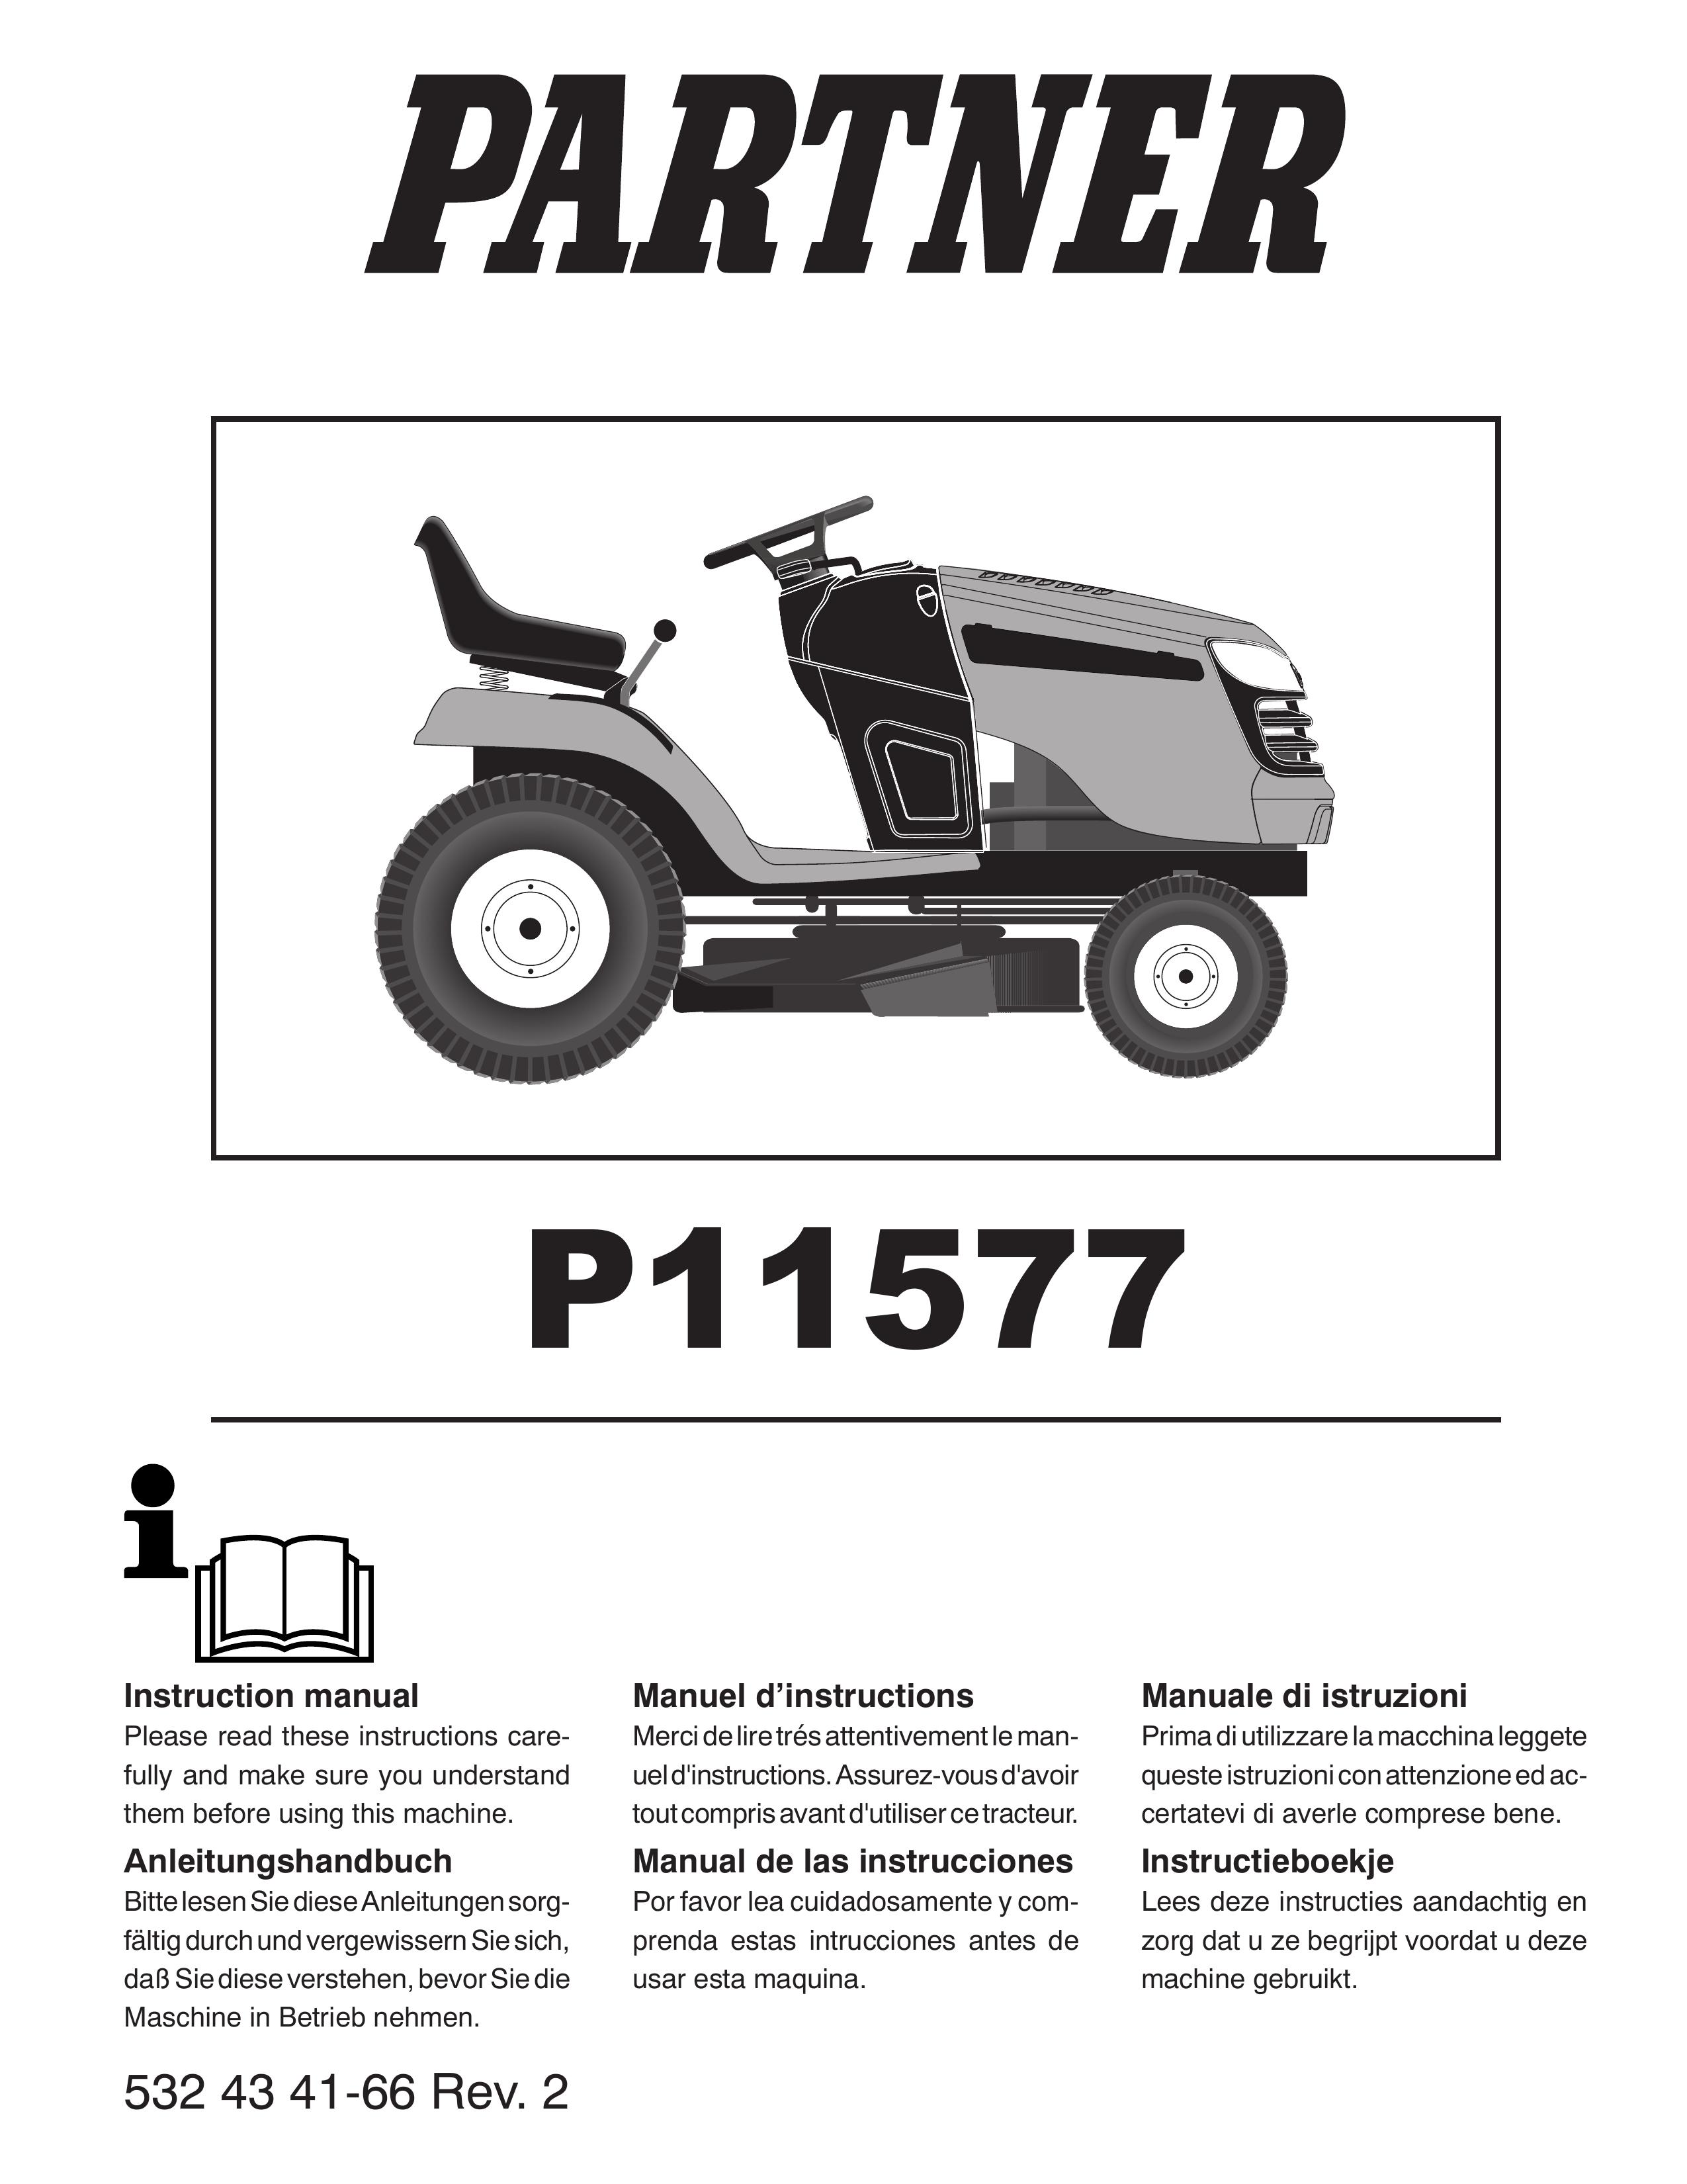 Partner Tech P11577 Lawn Mower User Manual